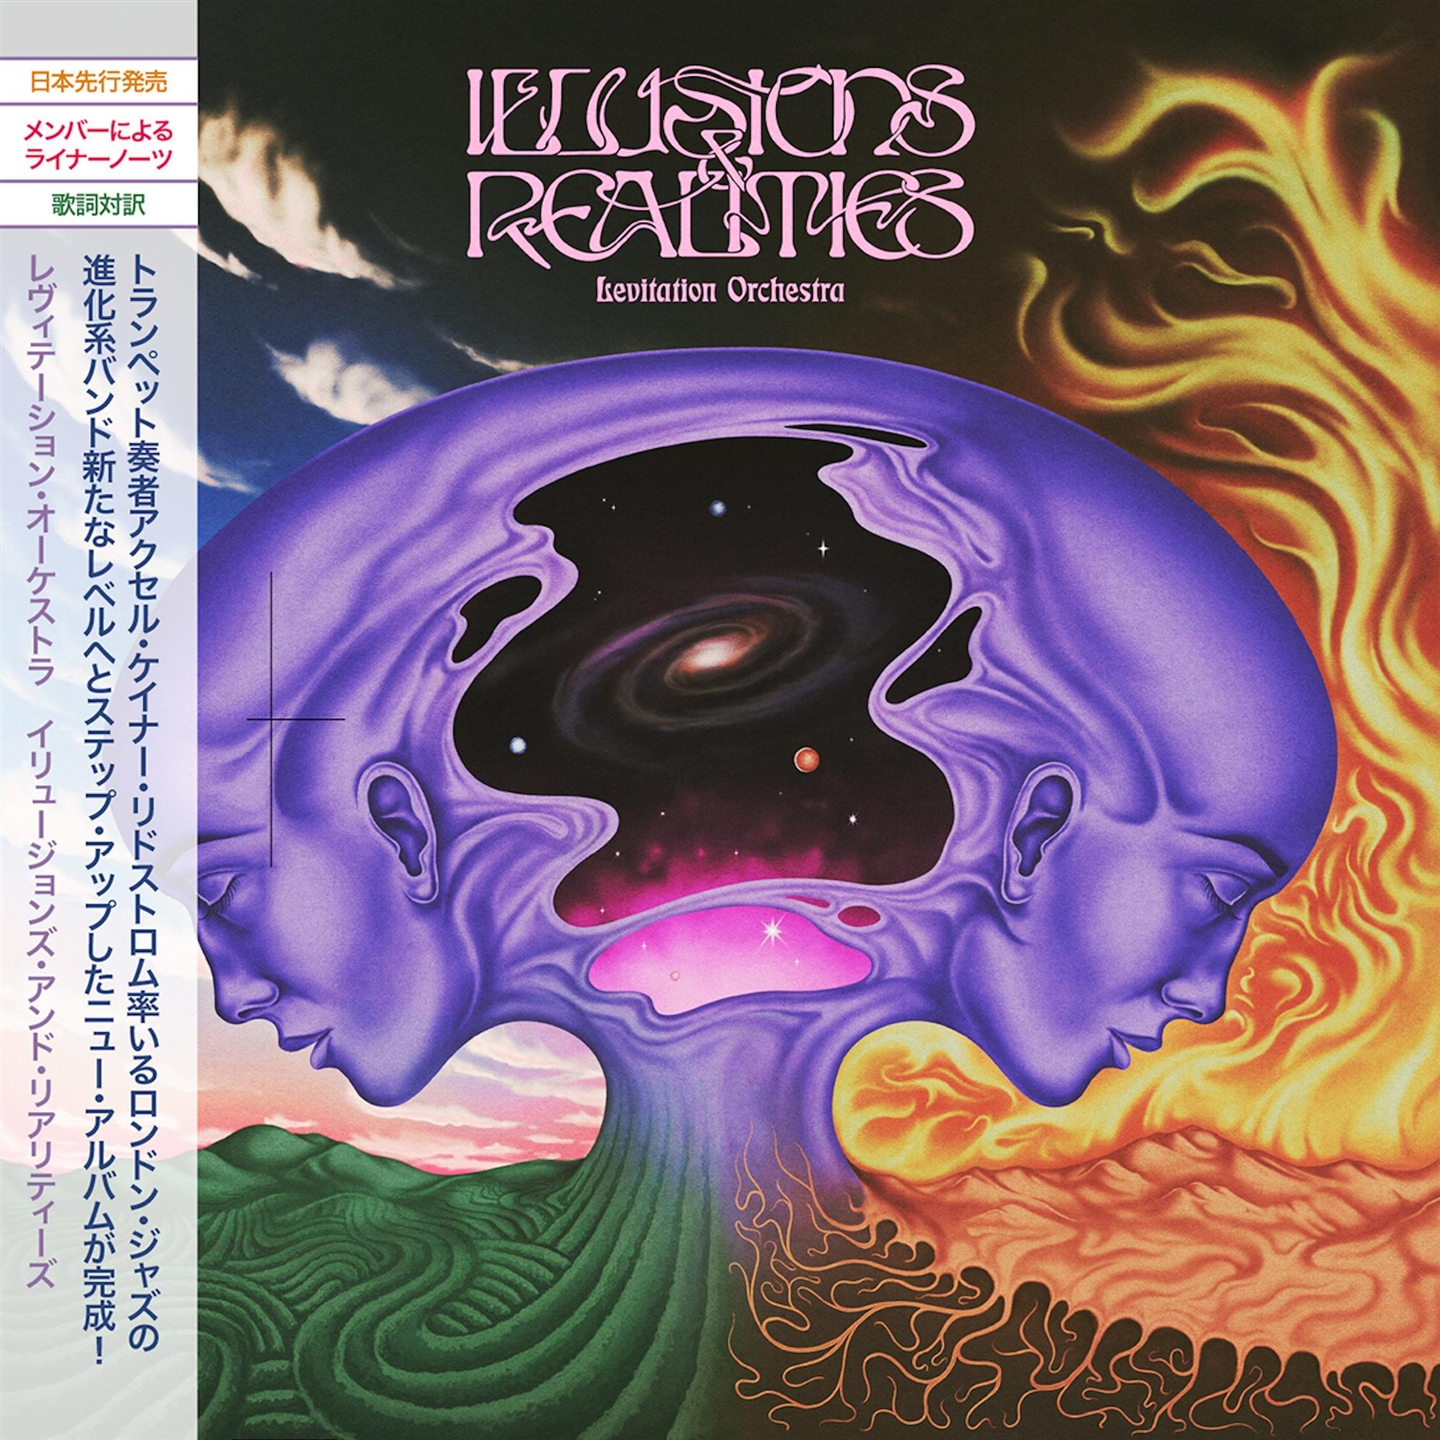 ILLUSIONS & REALITIES (JAPANESE EDITION) [LP]